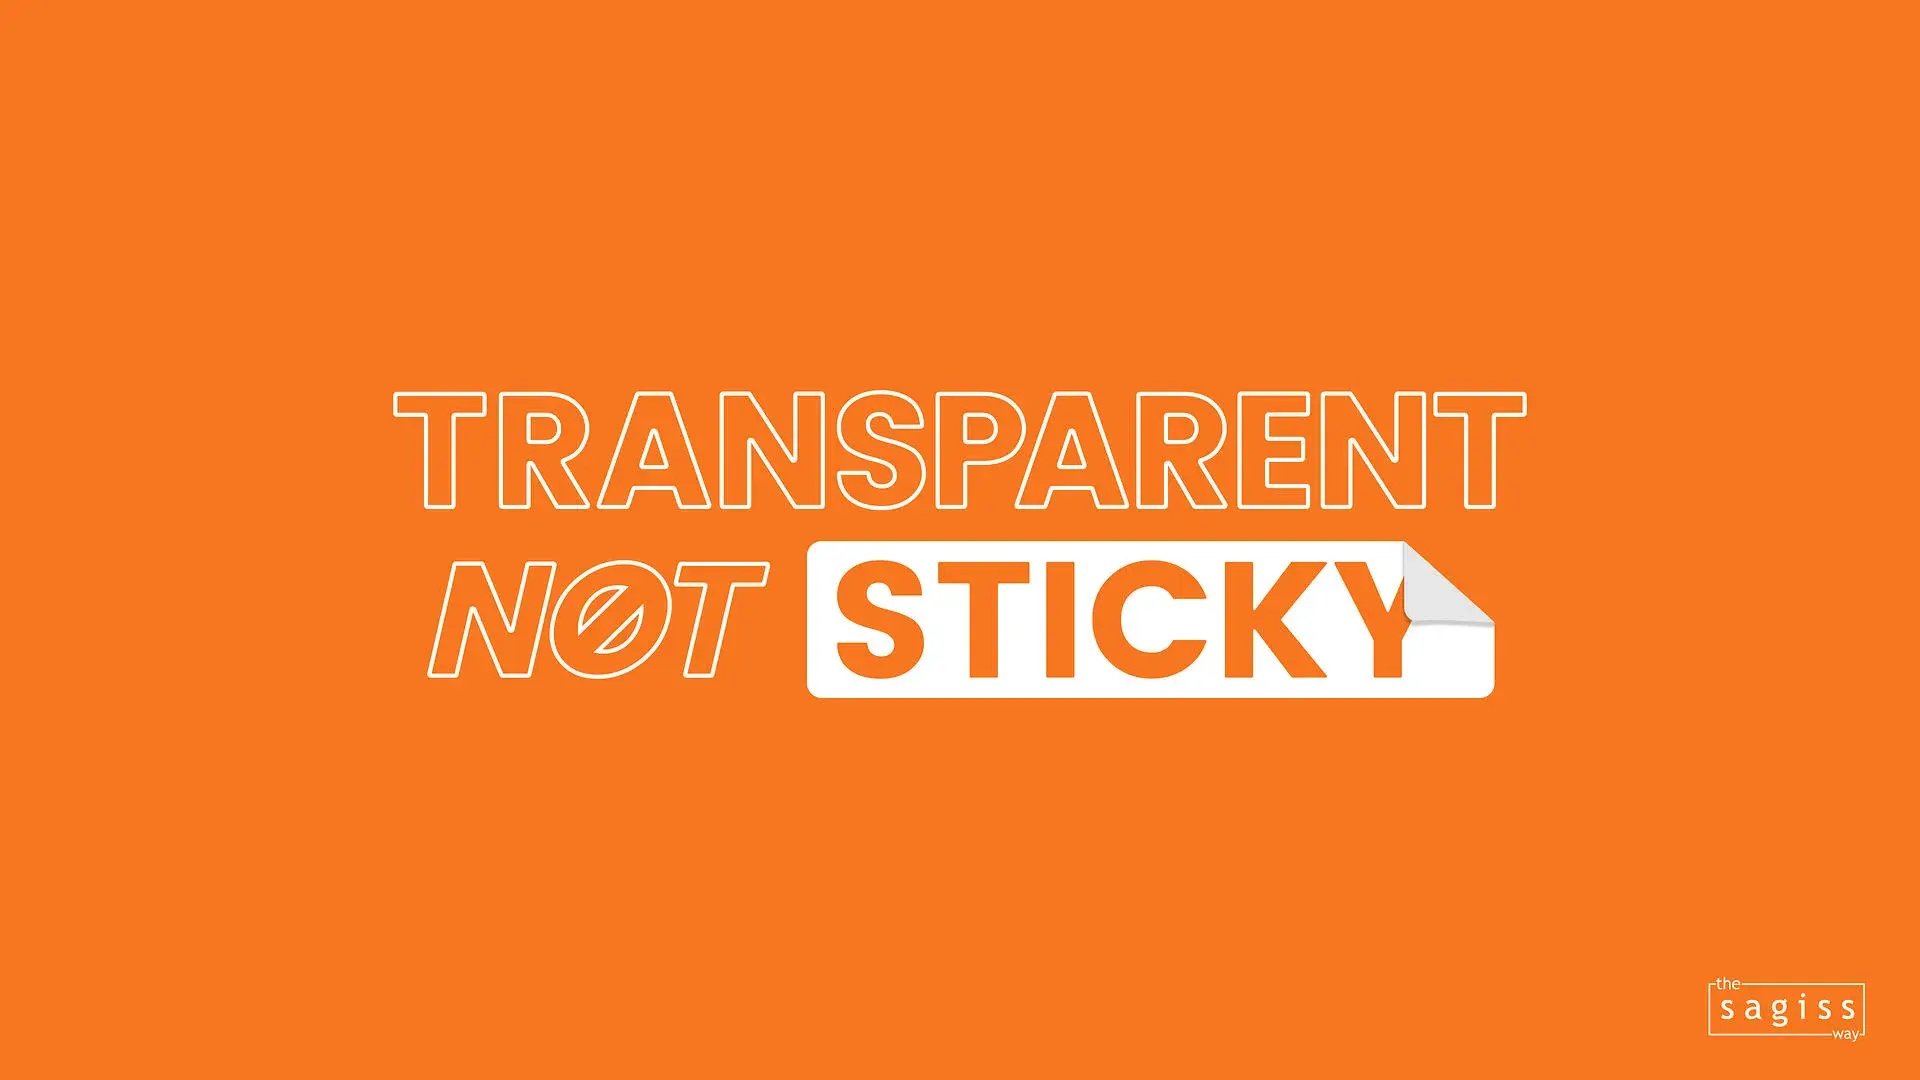 the-sagiss-way-transparent-not-sticky